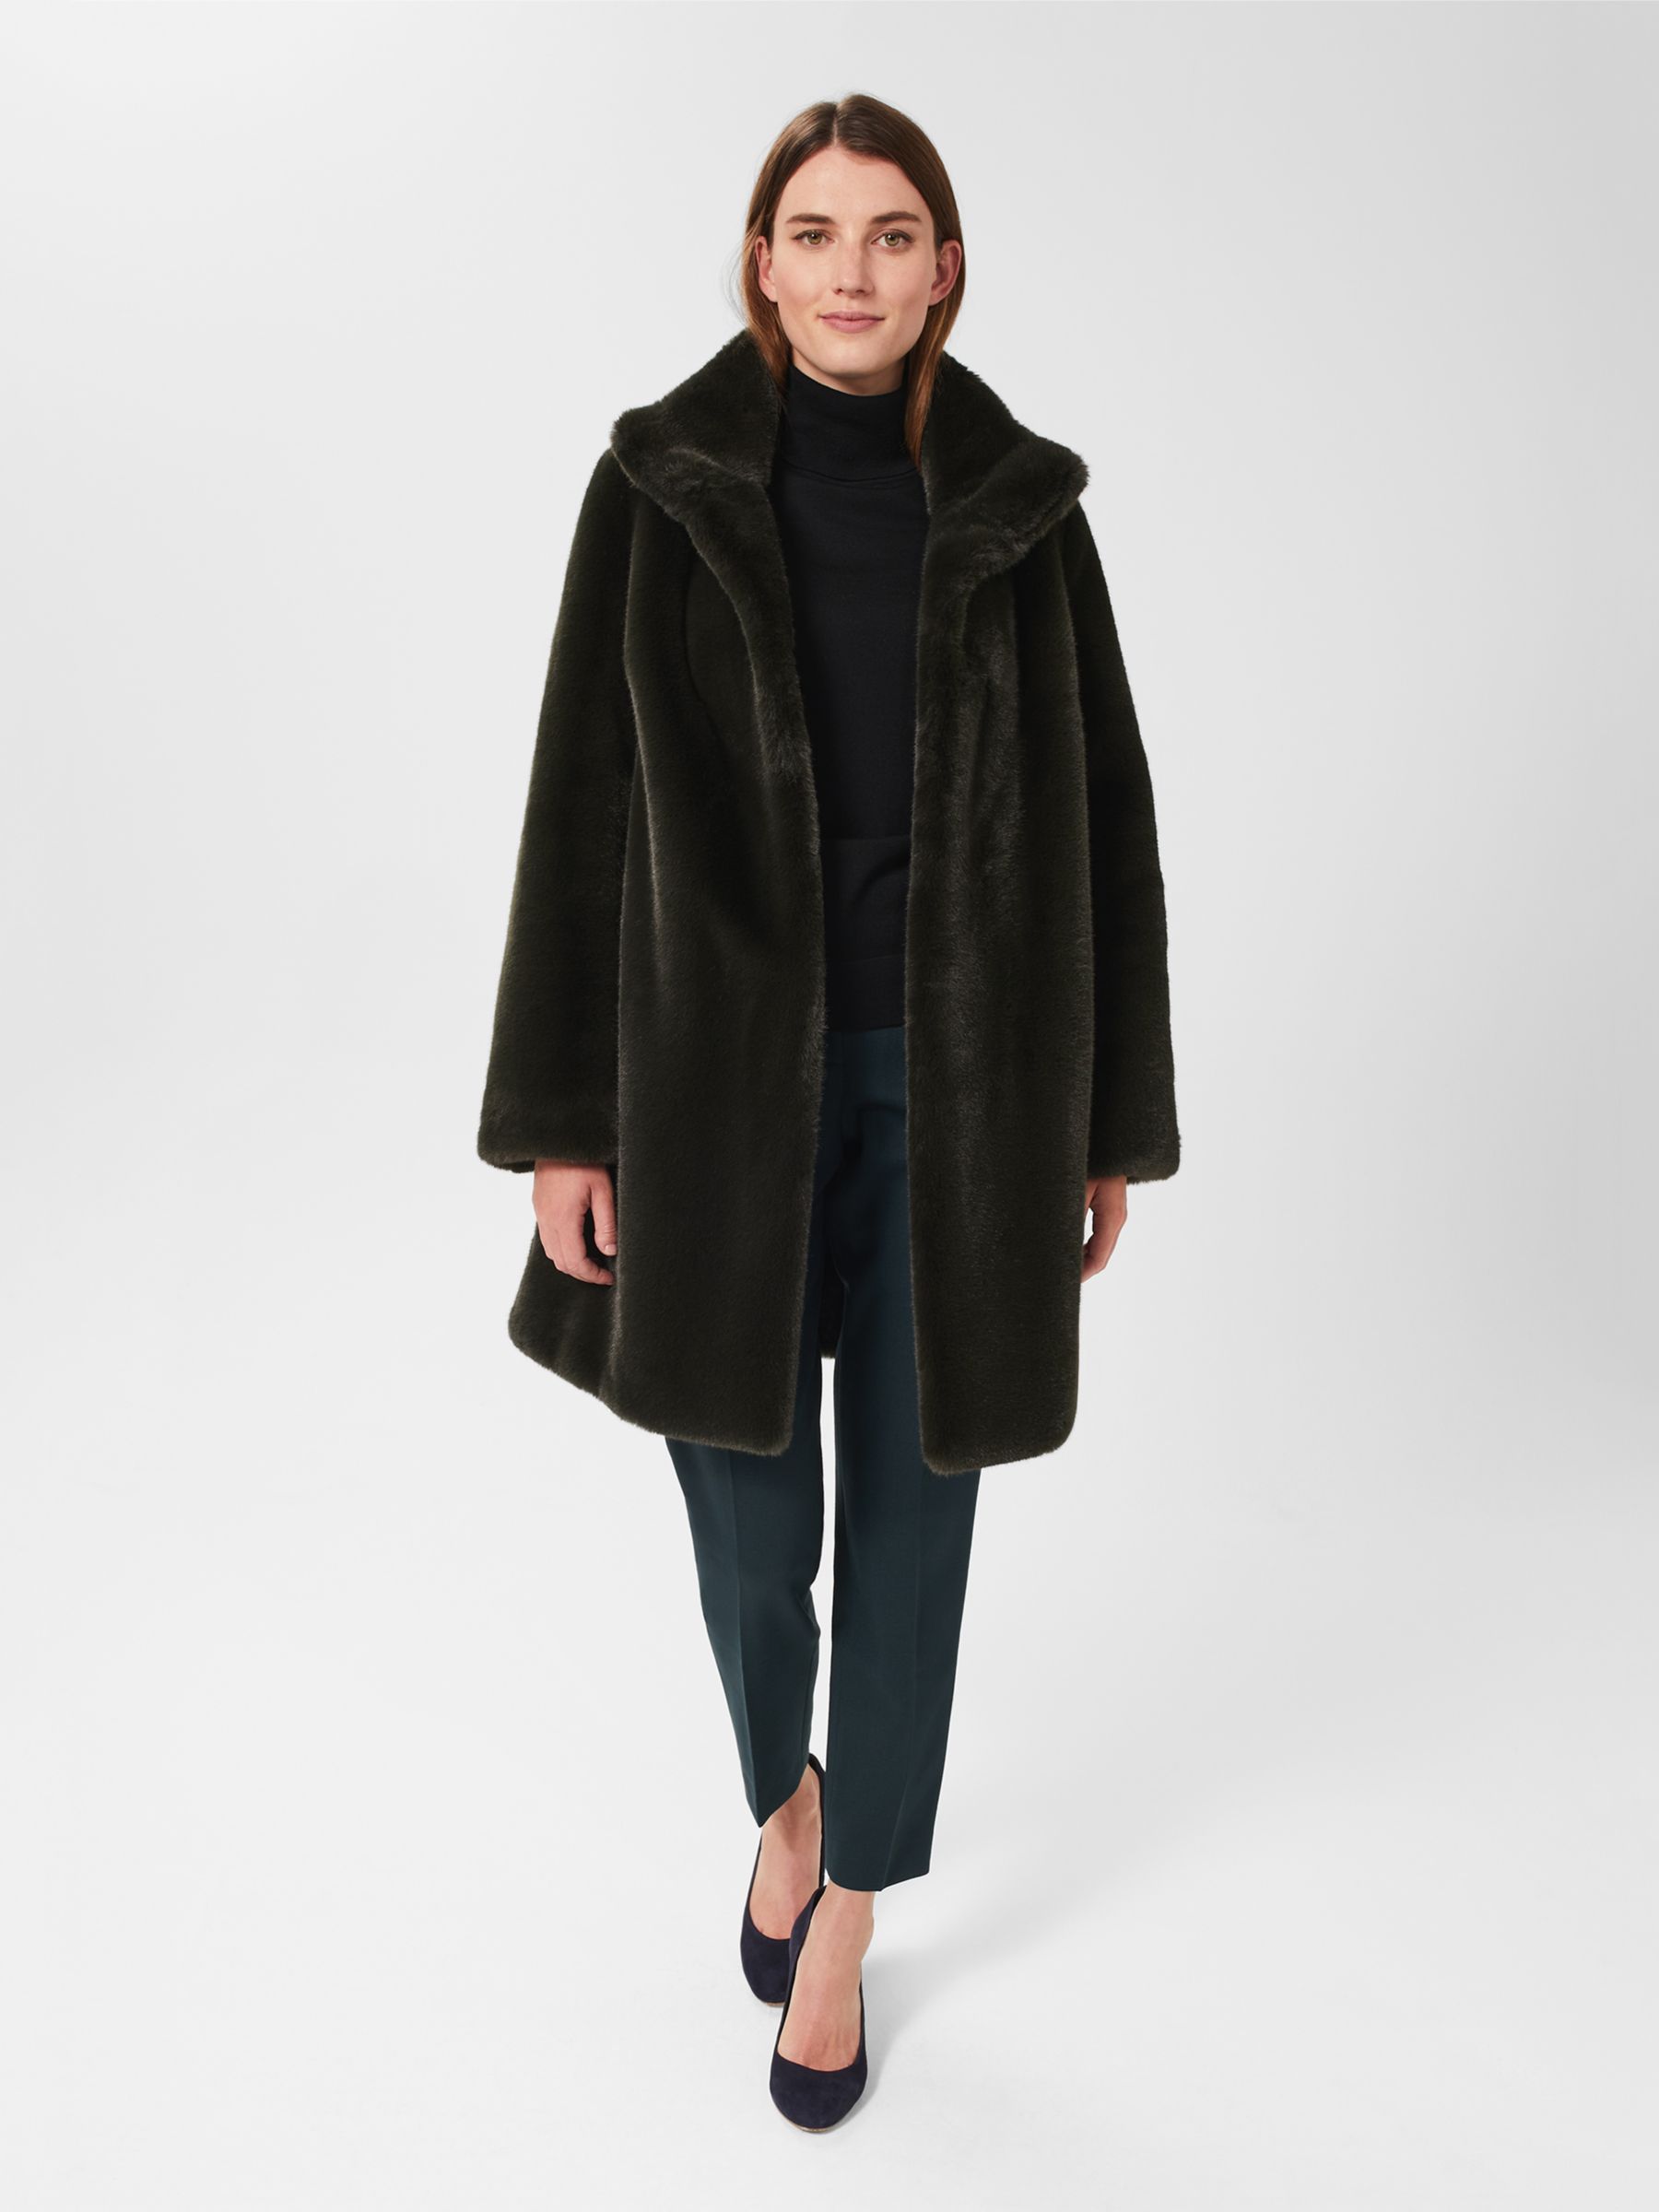 Hobbs Maddox Faux Fur Coat, Olive Green at John Lewis & Partners